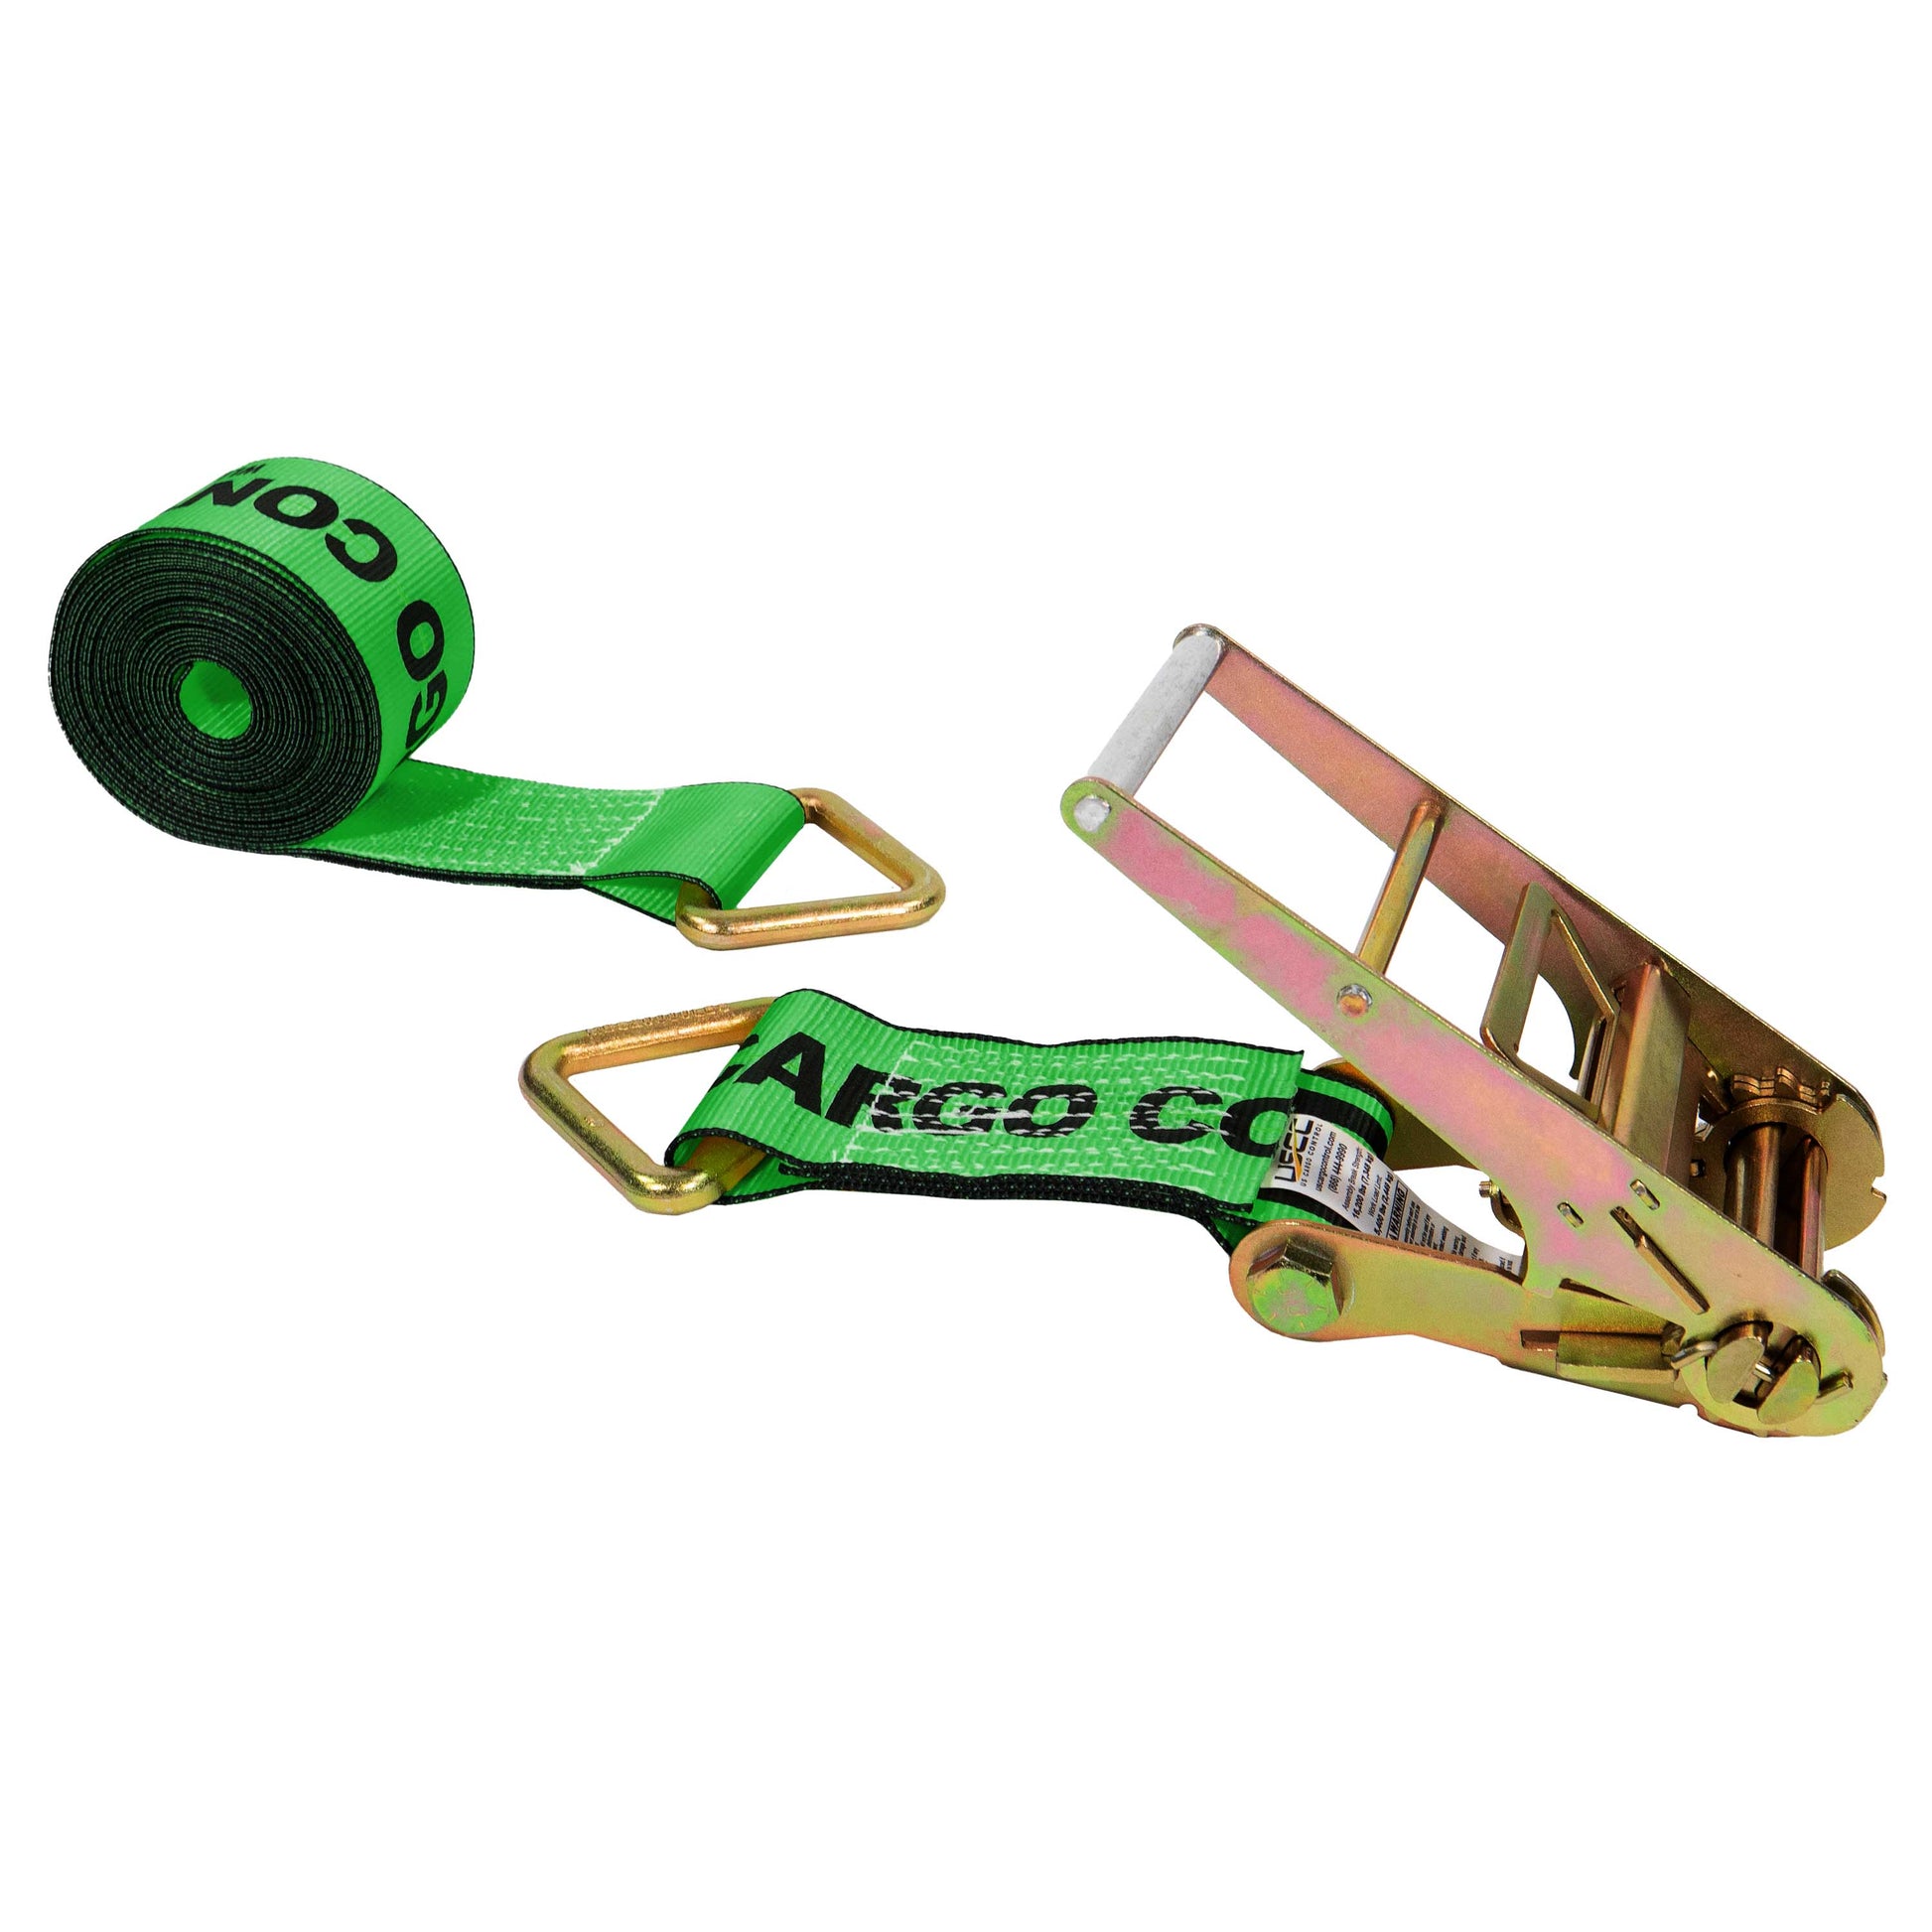 27' 4" heavy-duty green D ring ratchet strap